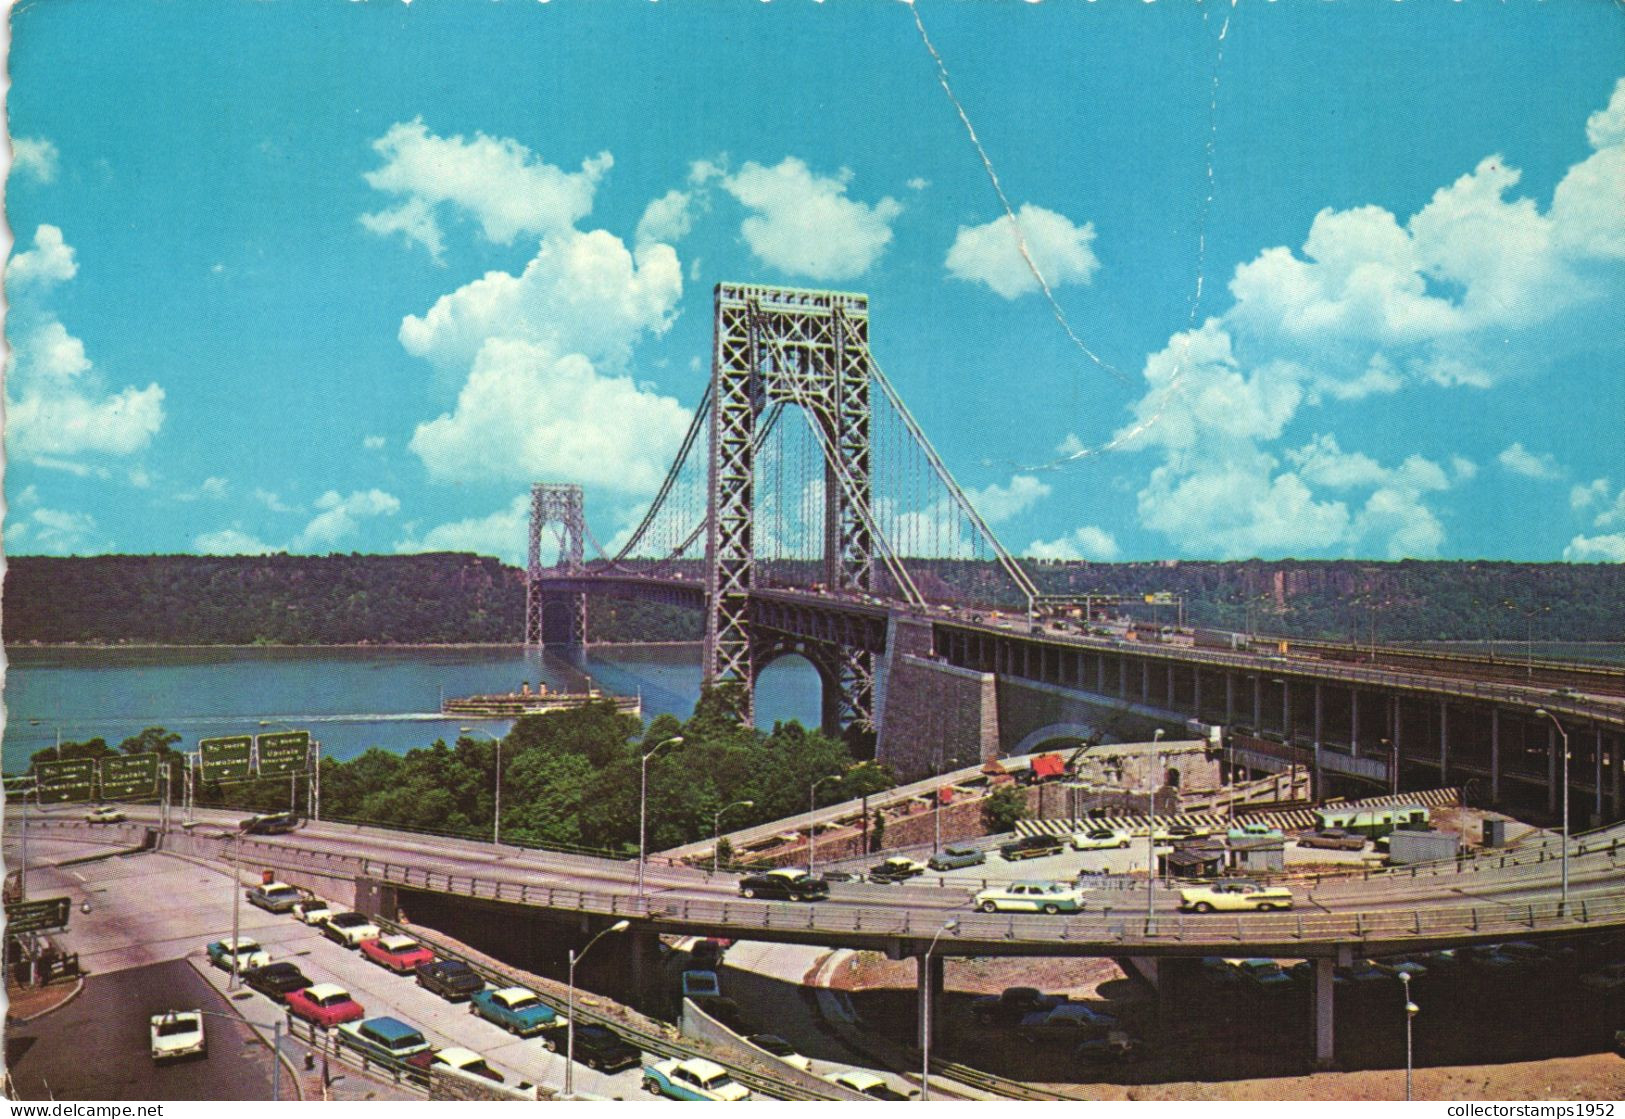 GEORGE WASHINGTON BRIDGE, NEW YORK, ARCHITECTURE, CARS, UNITED STATES, POSTCARD - Bridges & Tunnels